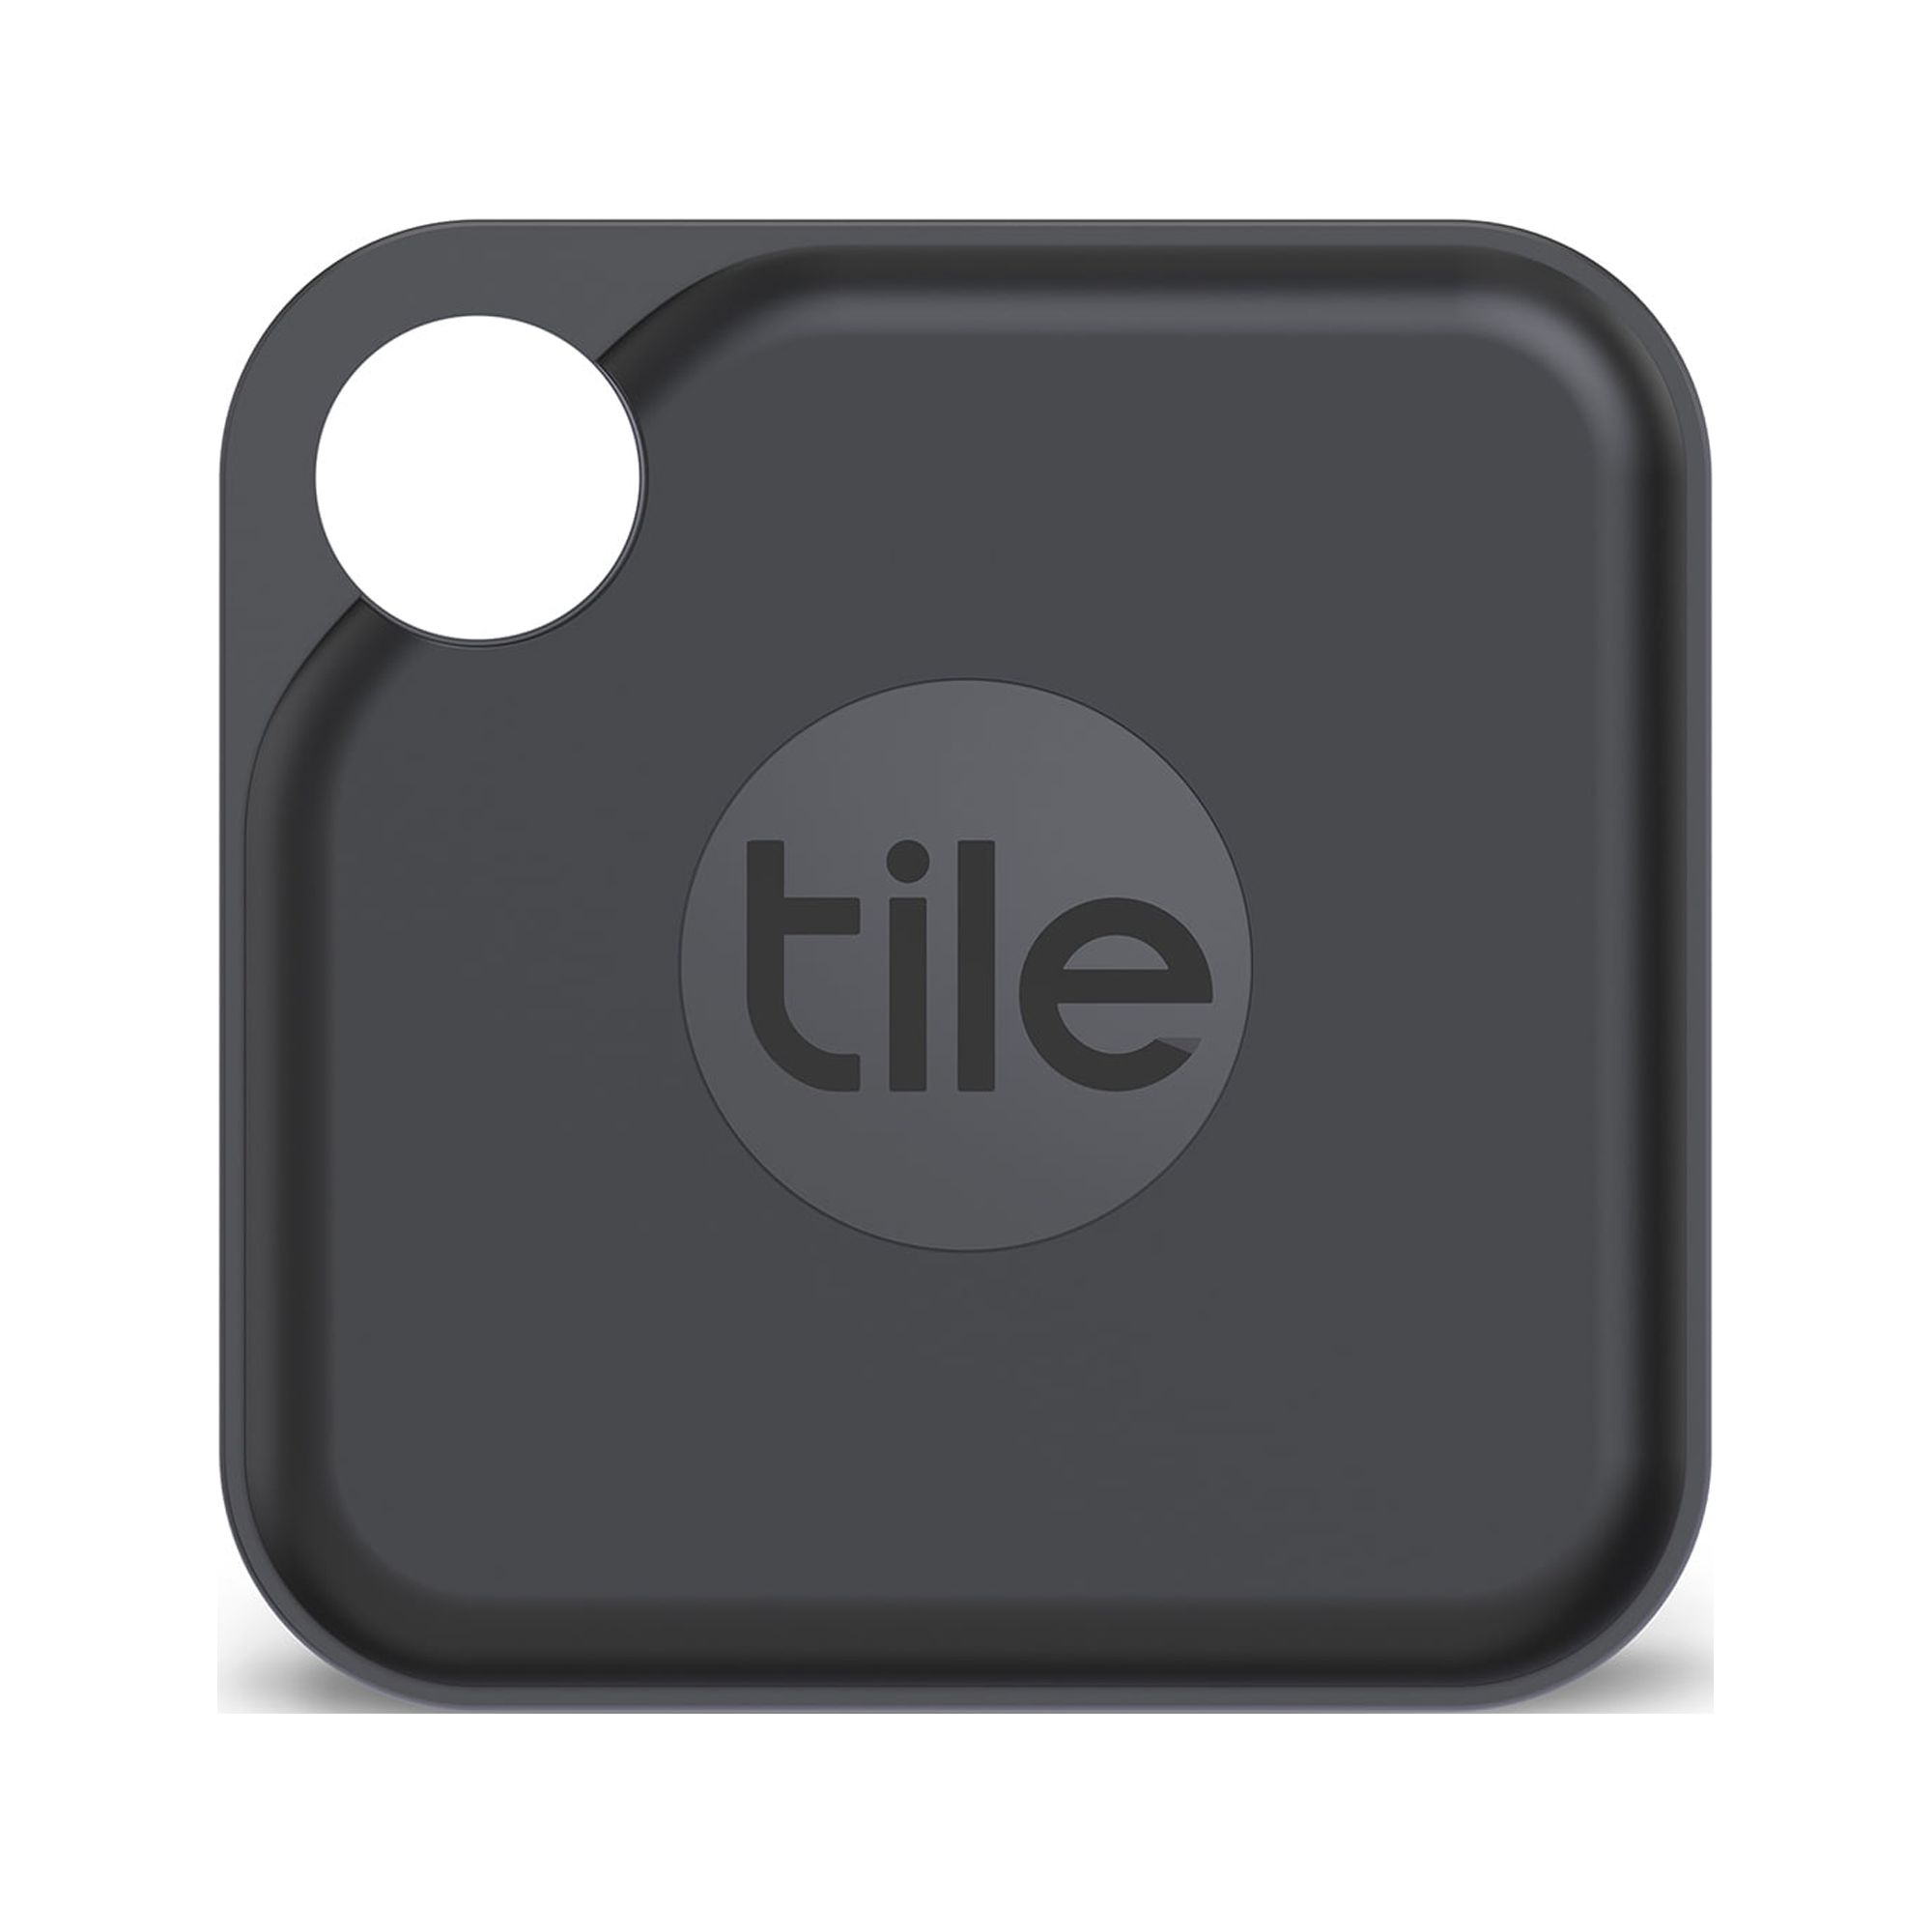 Tile RE-21001 Pro 2020 Item Tracker - Black - image 1 of 5